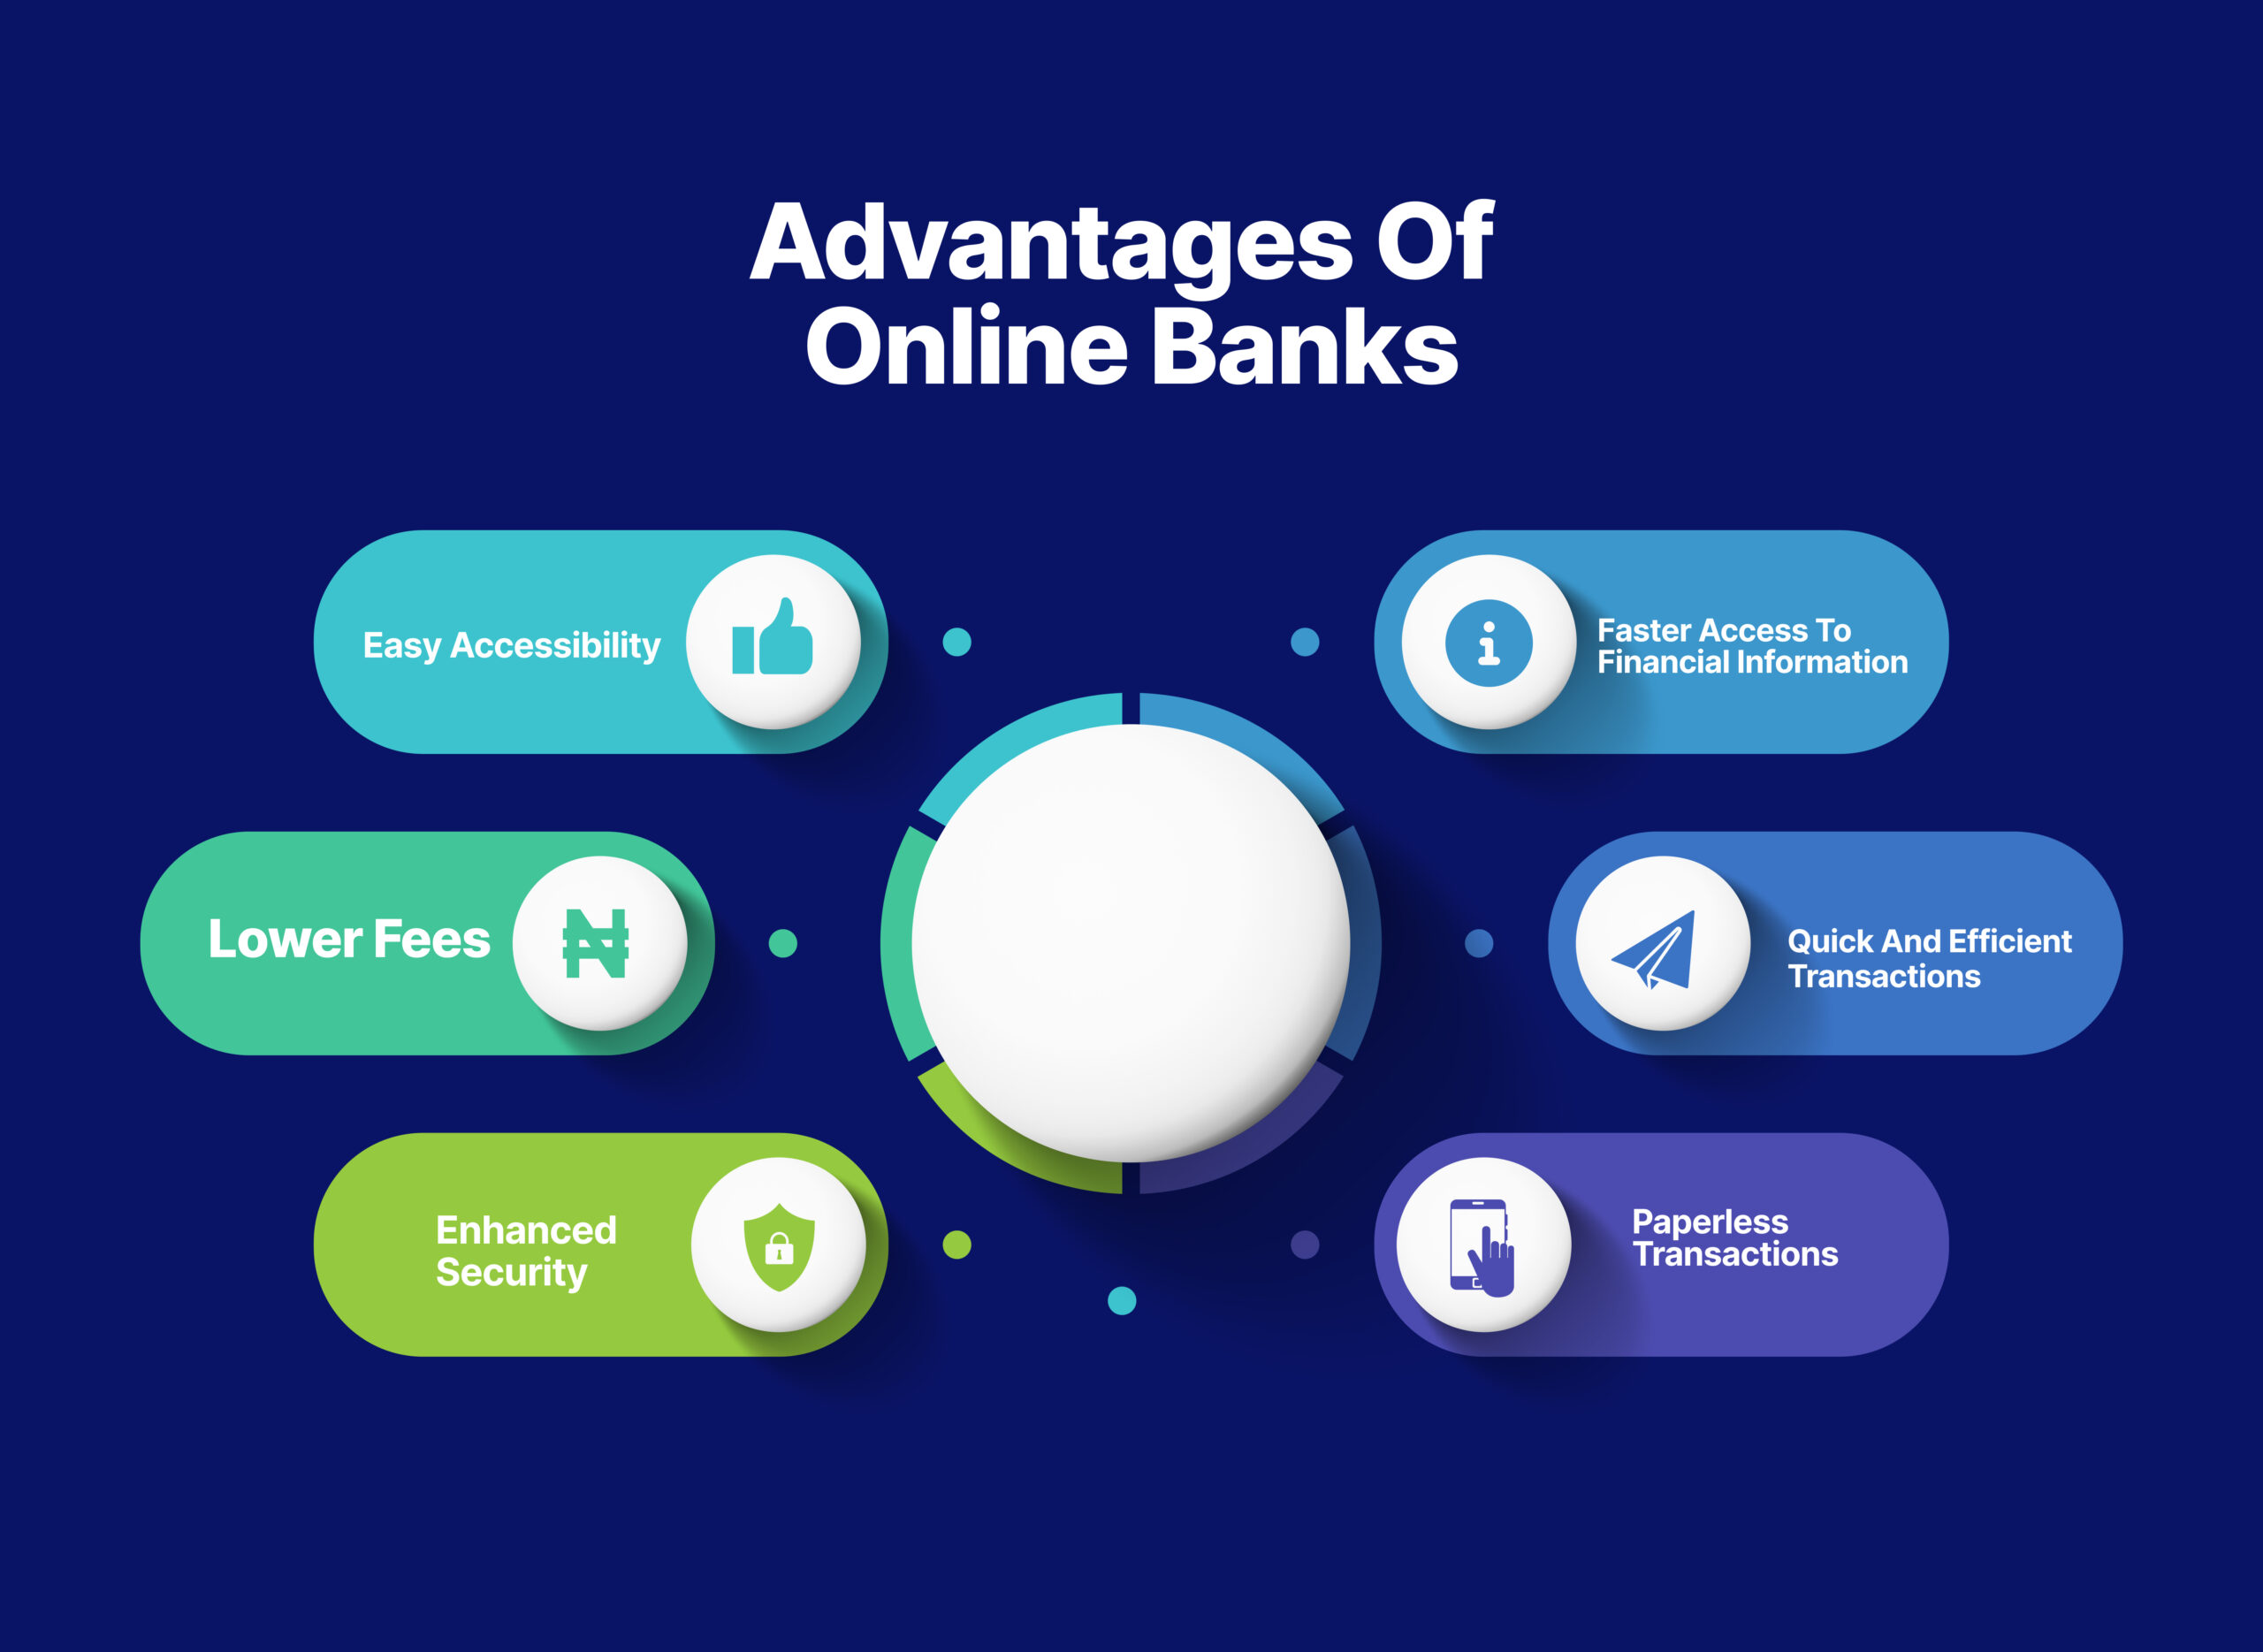 Advantages of digital banks